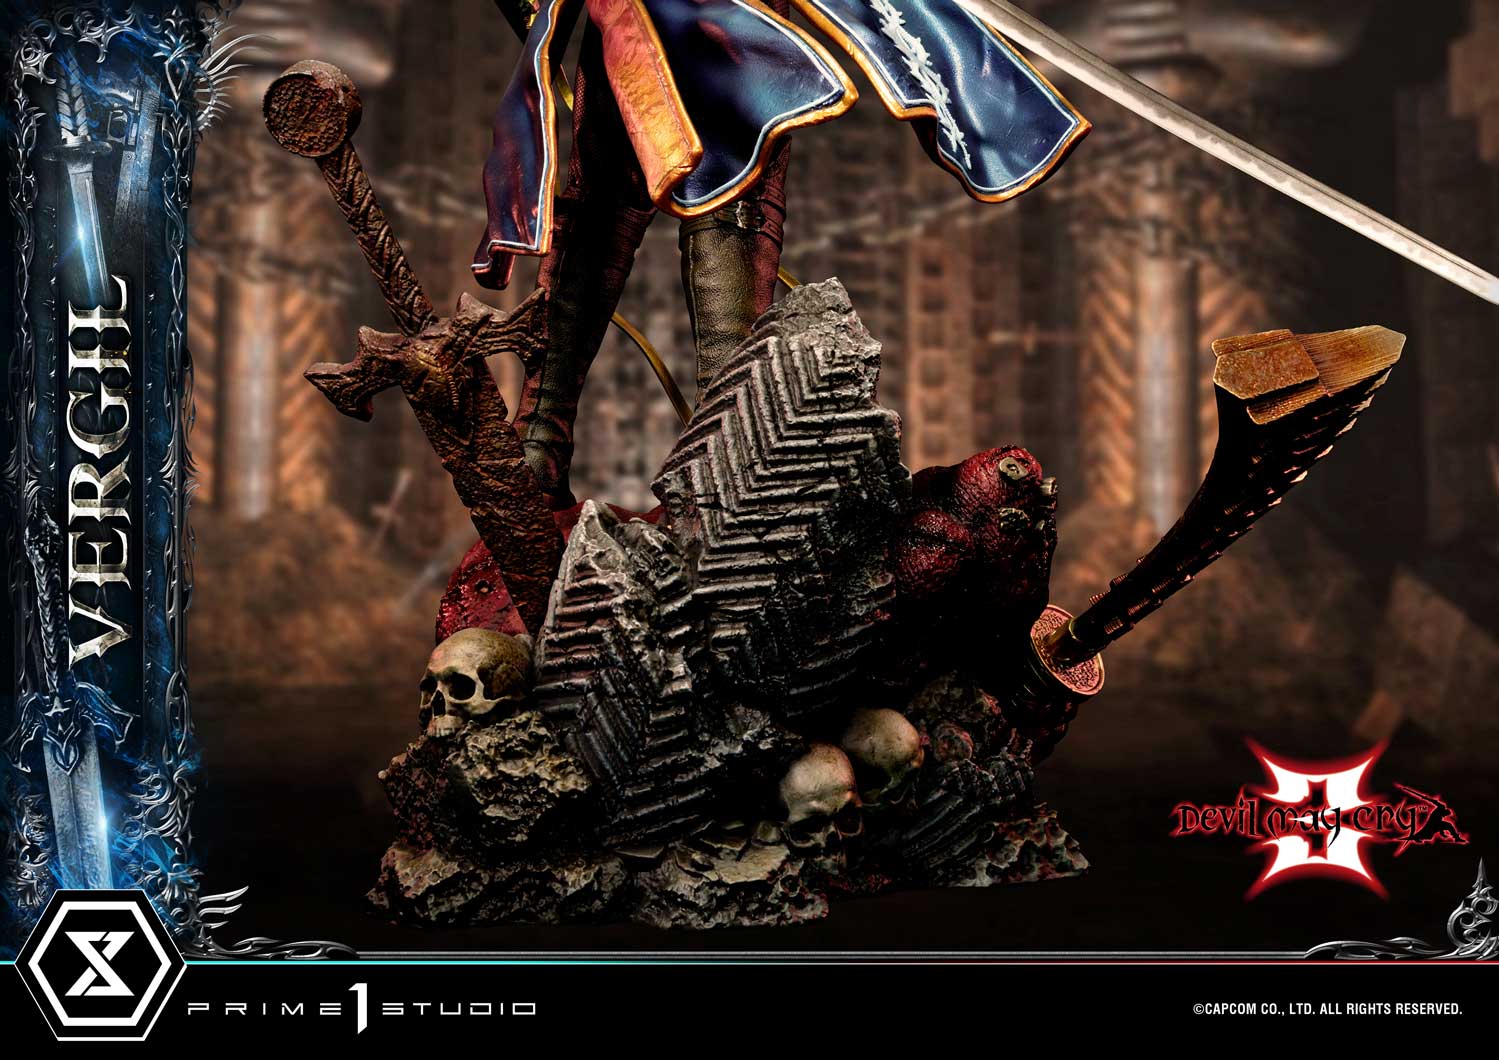 Devil May Cry: Prime 1 revela belíssima estatueta de Vergil